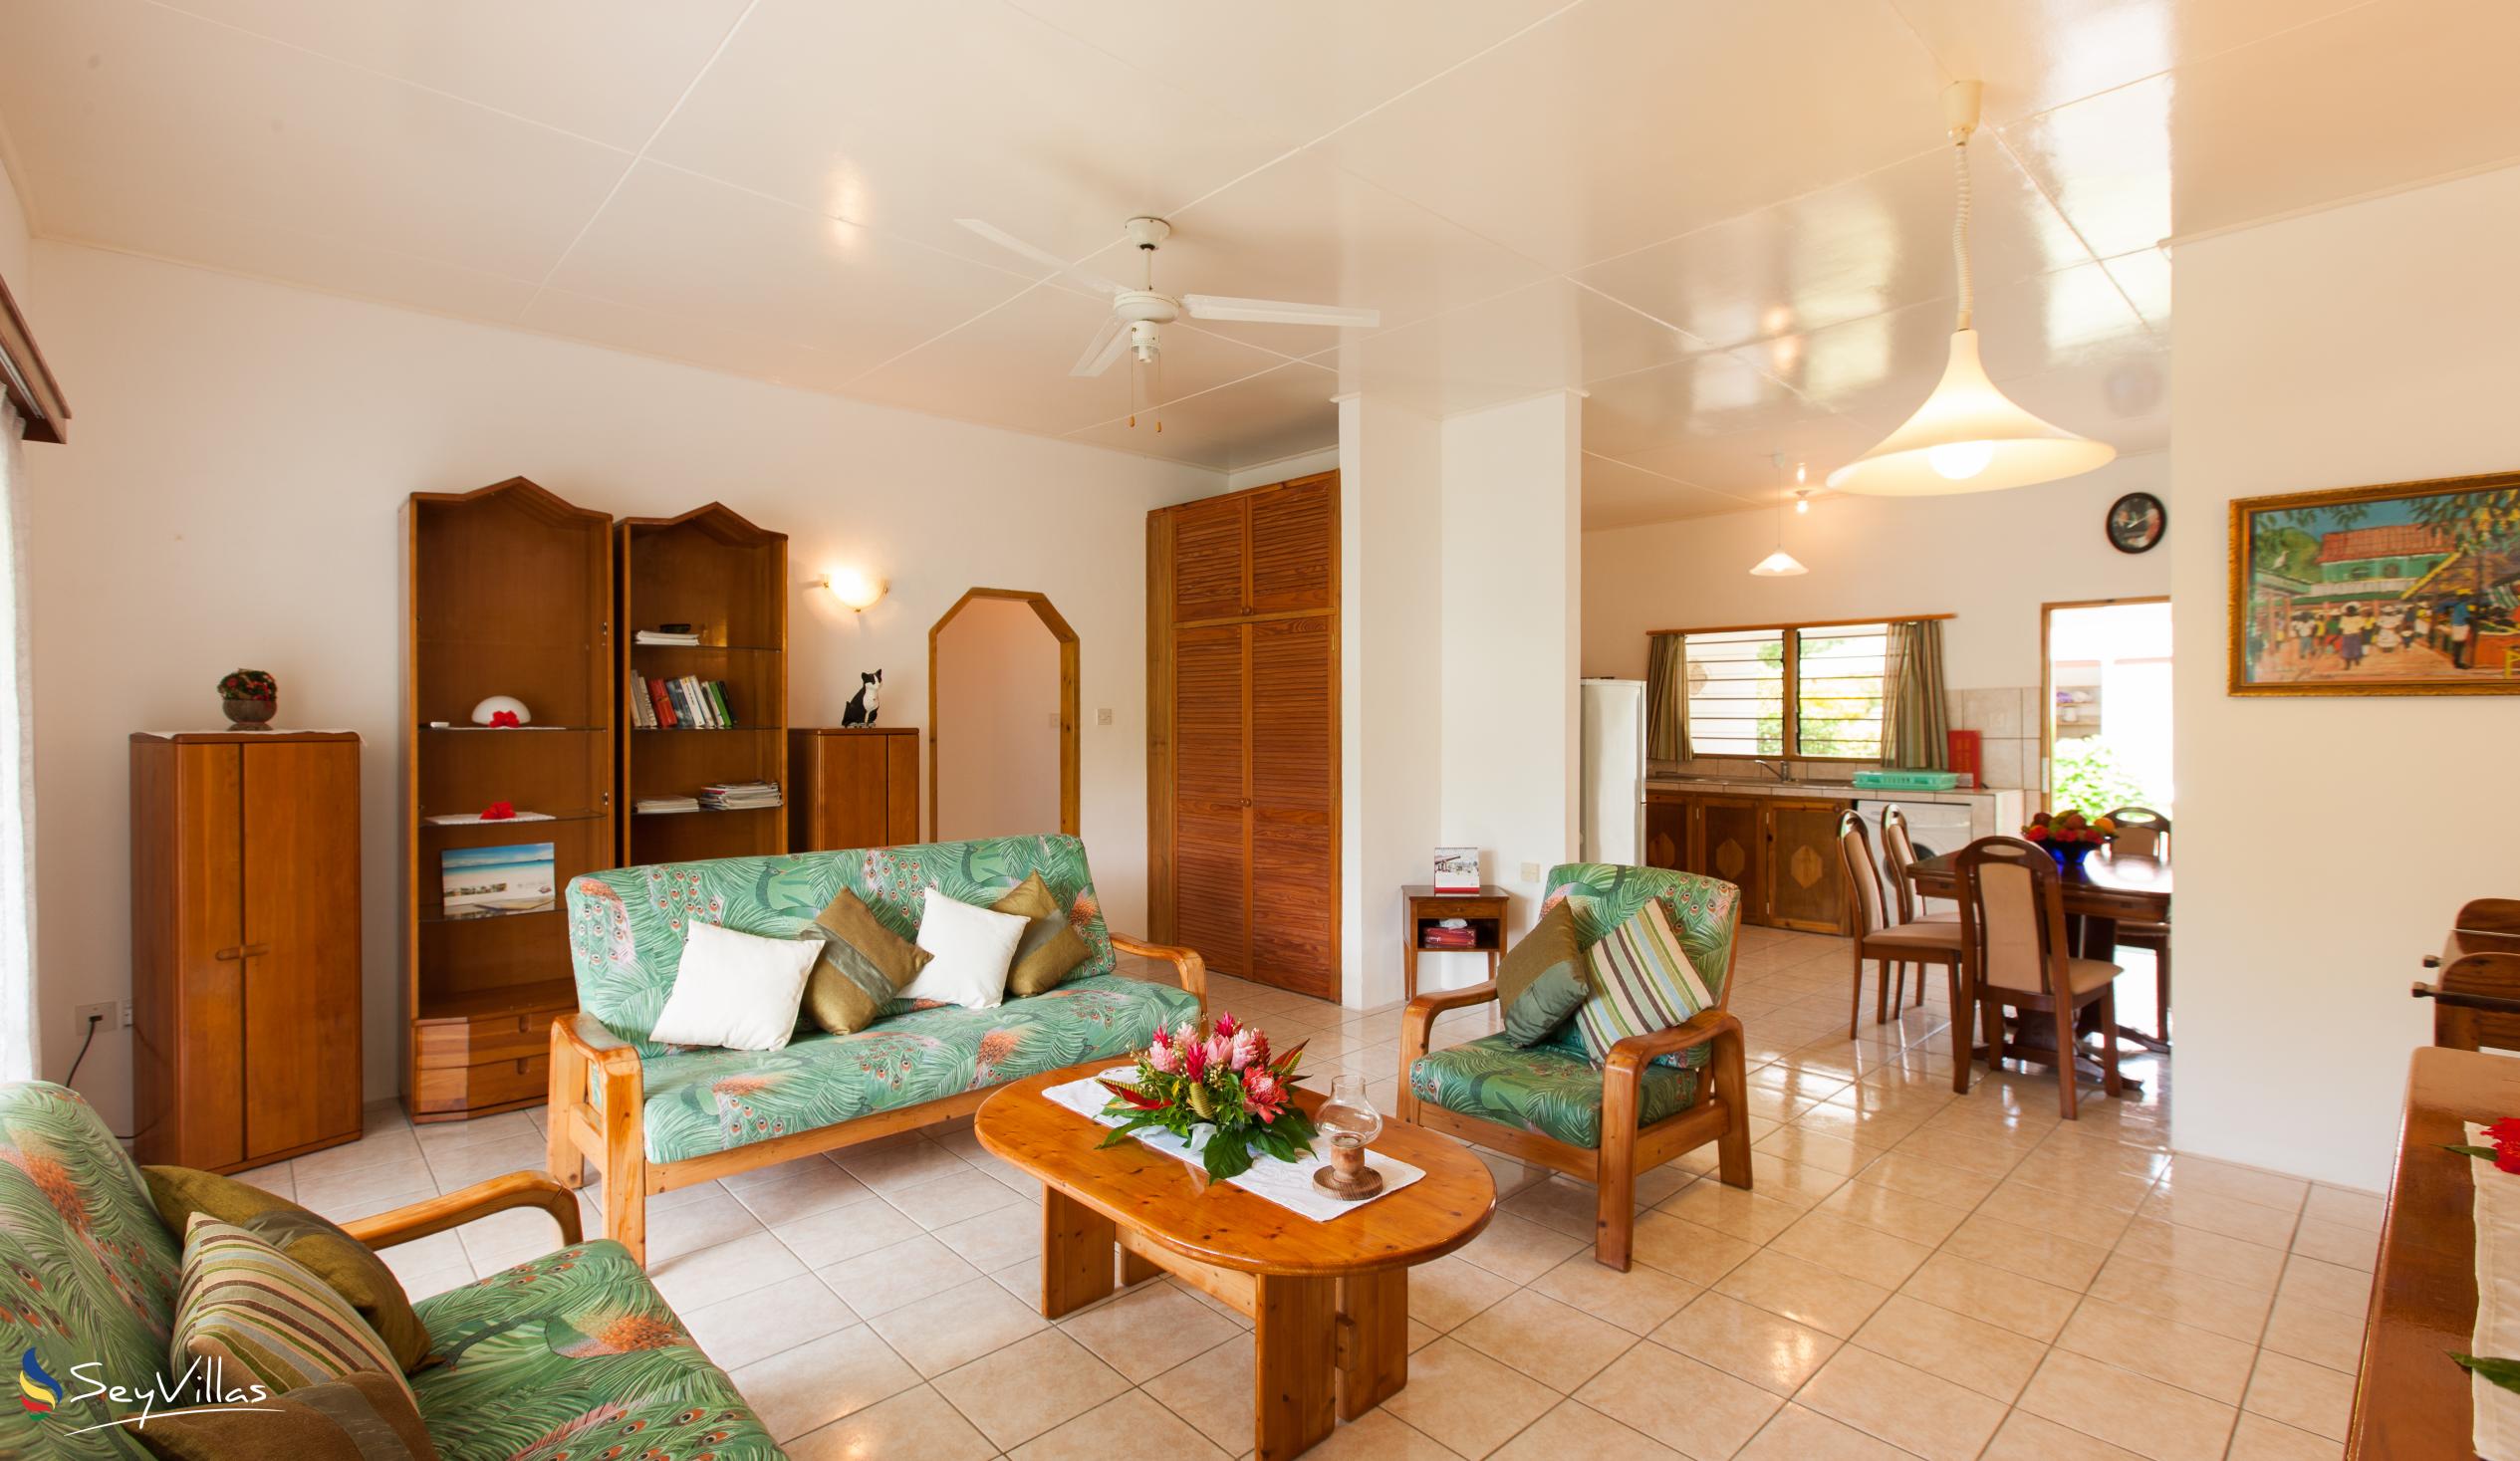 Photo 52: Le Relax St. Joseph Guest House - Indoor area - Praslin (Seychelles)